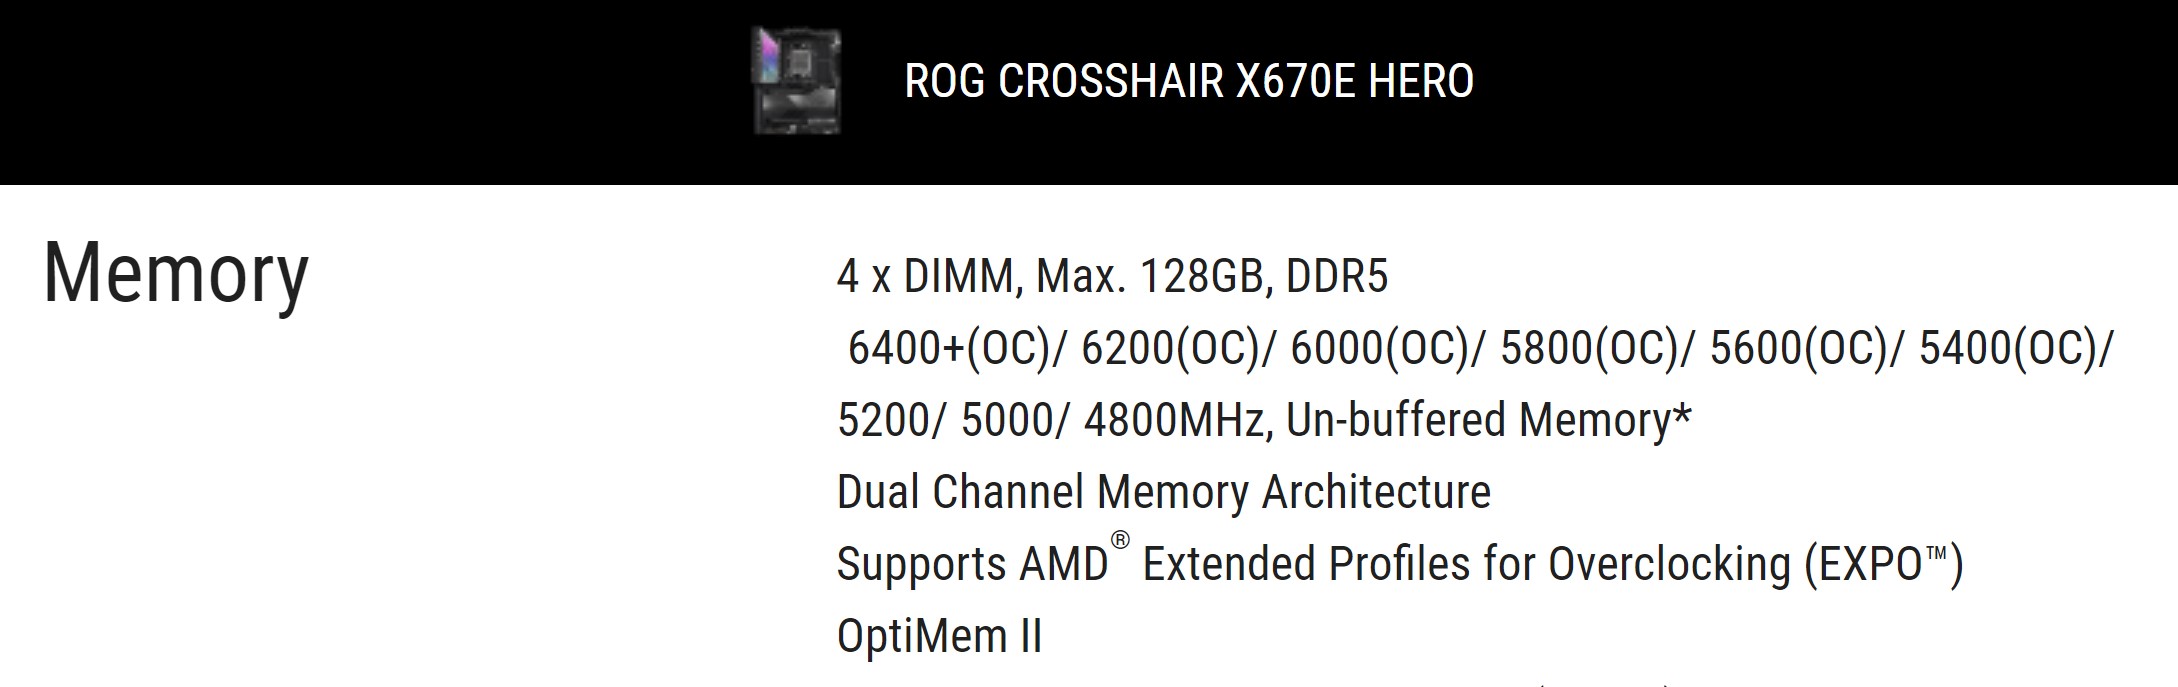 ROG CROSSHAIR X670E HERO RAM Support